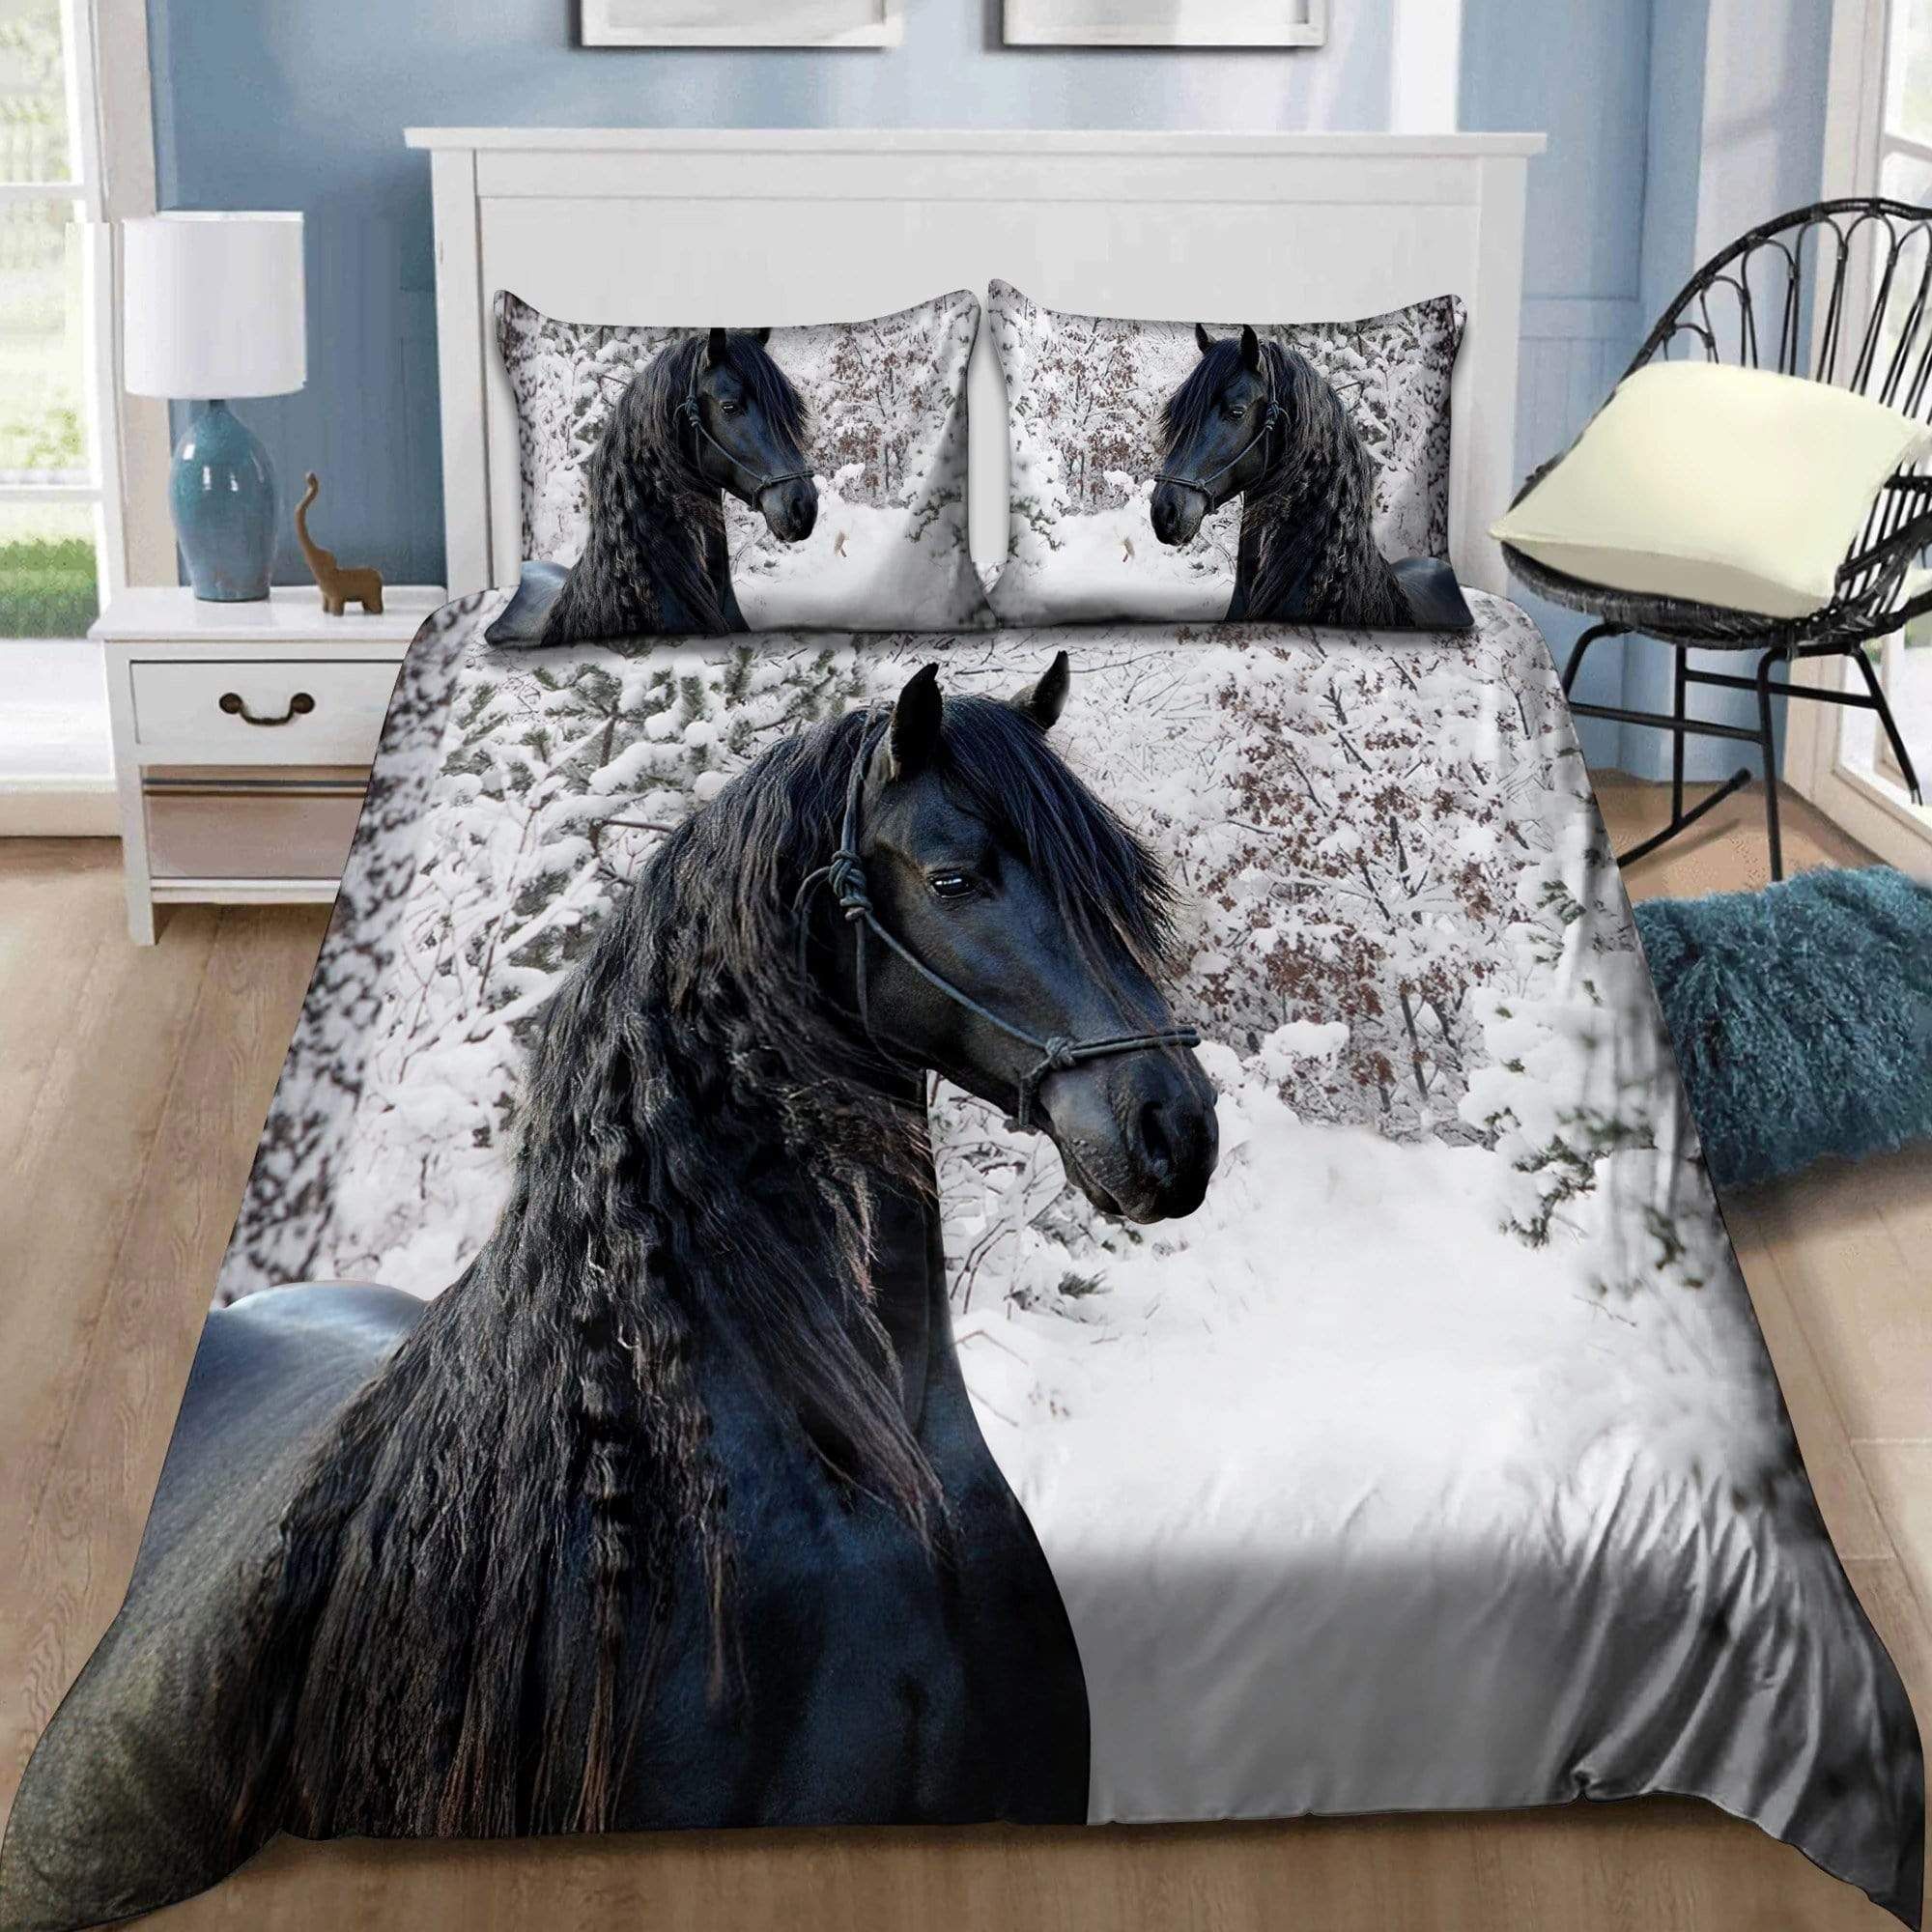 Beautiful Black Horse In Winter Duvet Cover Bedding Set